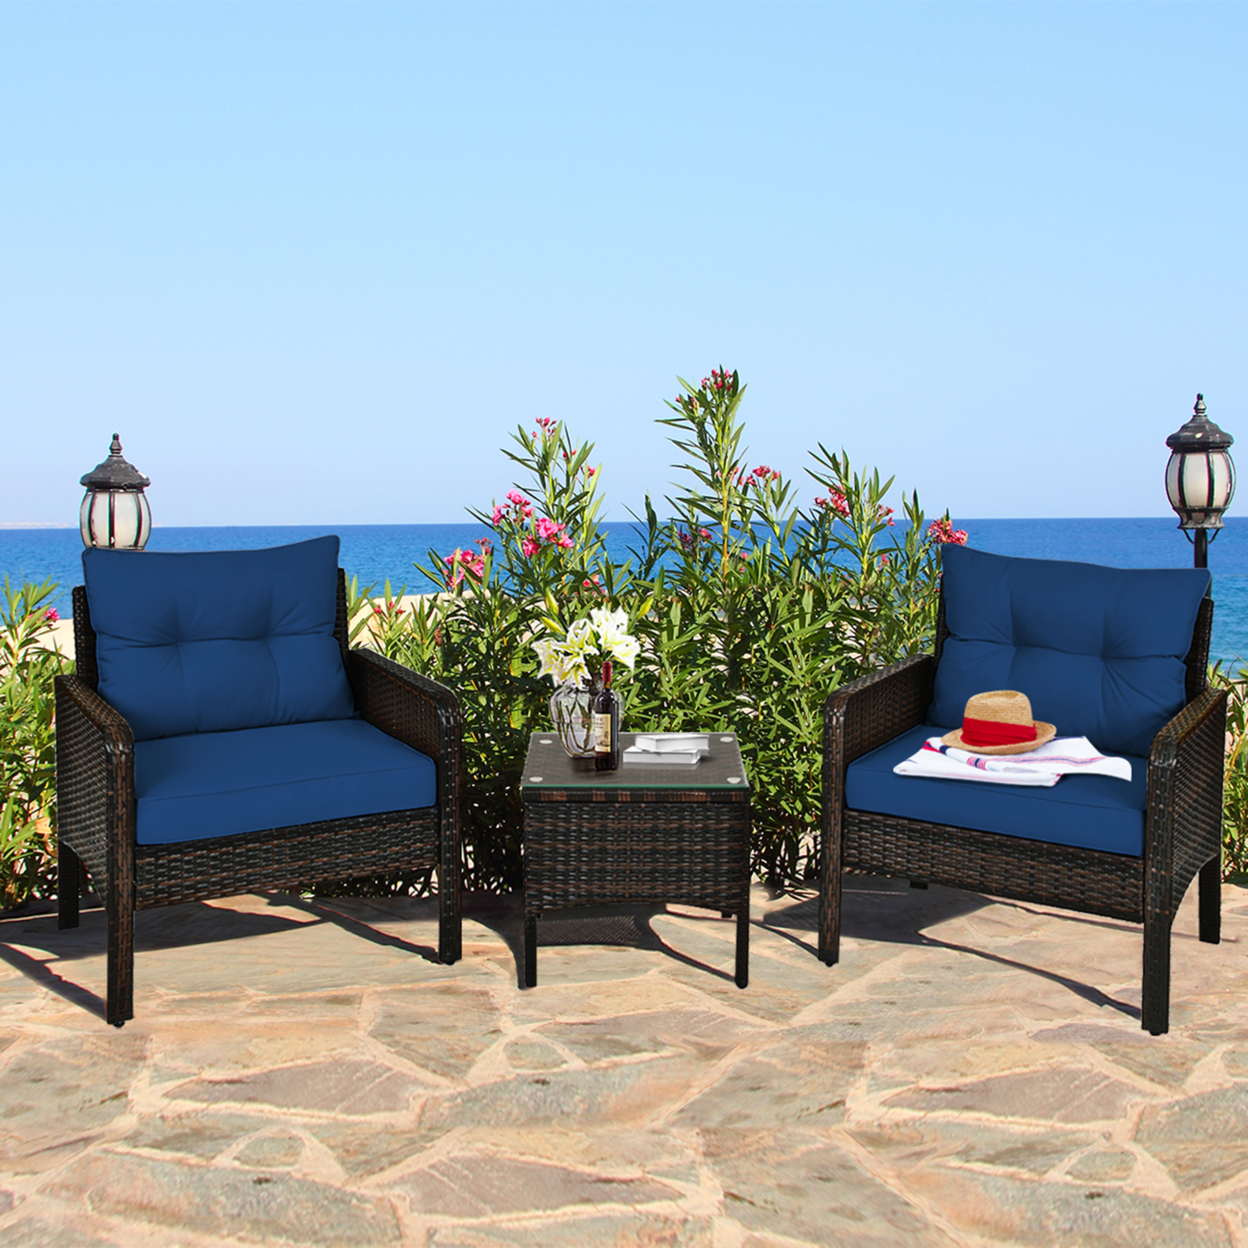 3PCS Rattan Patio Conversation Furniture Set Yard Outdoor W/ Navy Cushions